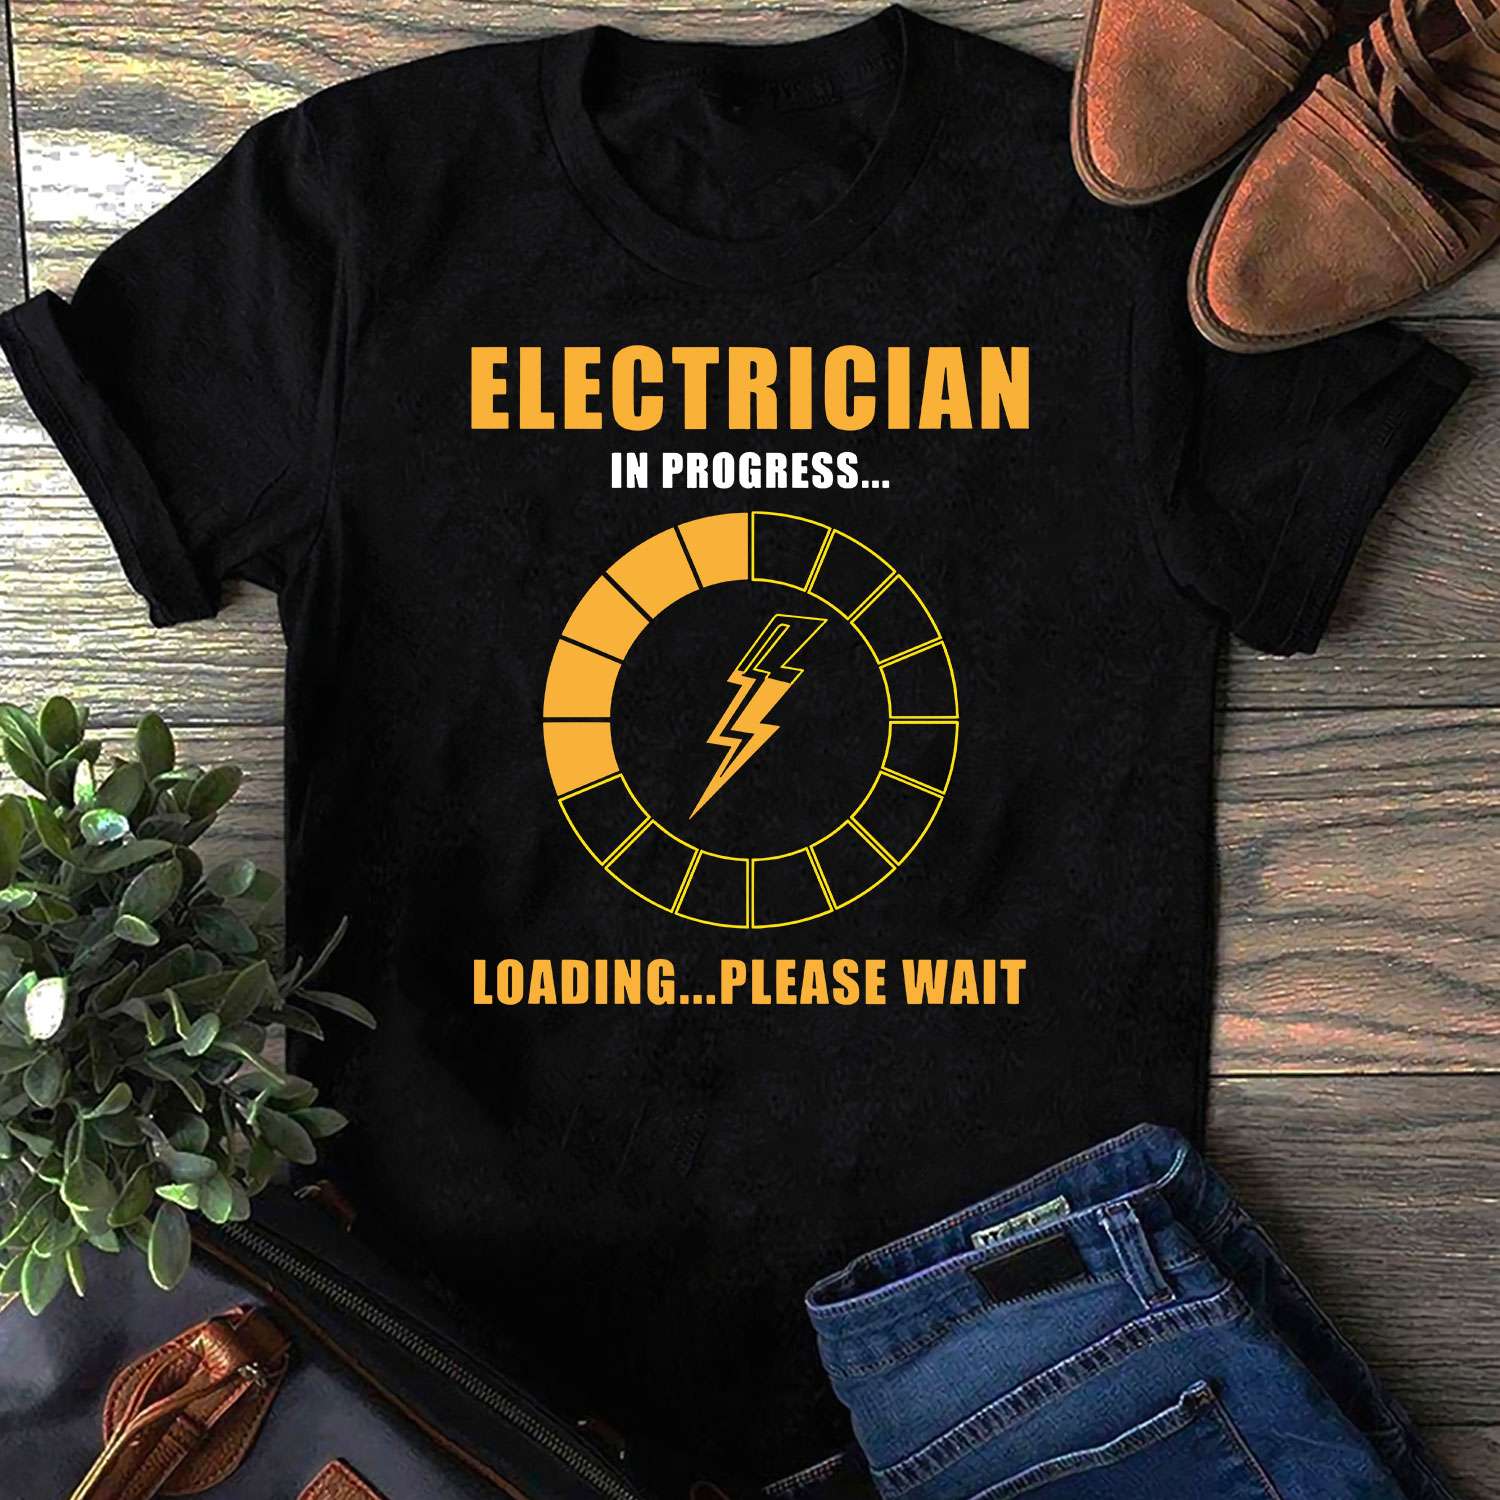 Eletrician in progress - Line man's gift, T-shirt for electrician